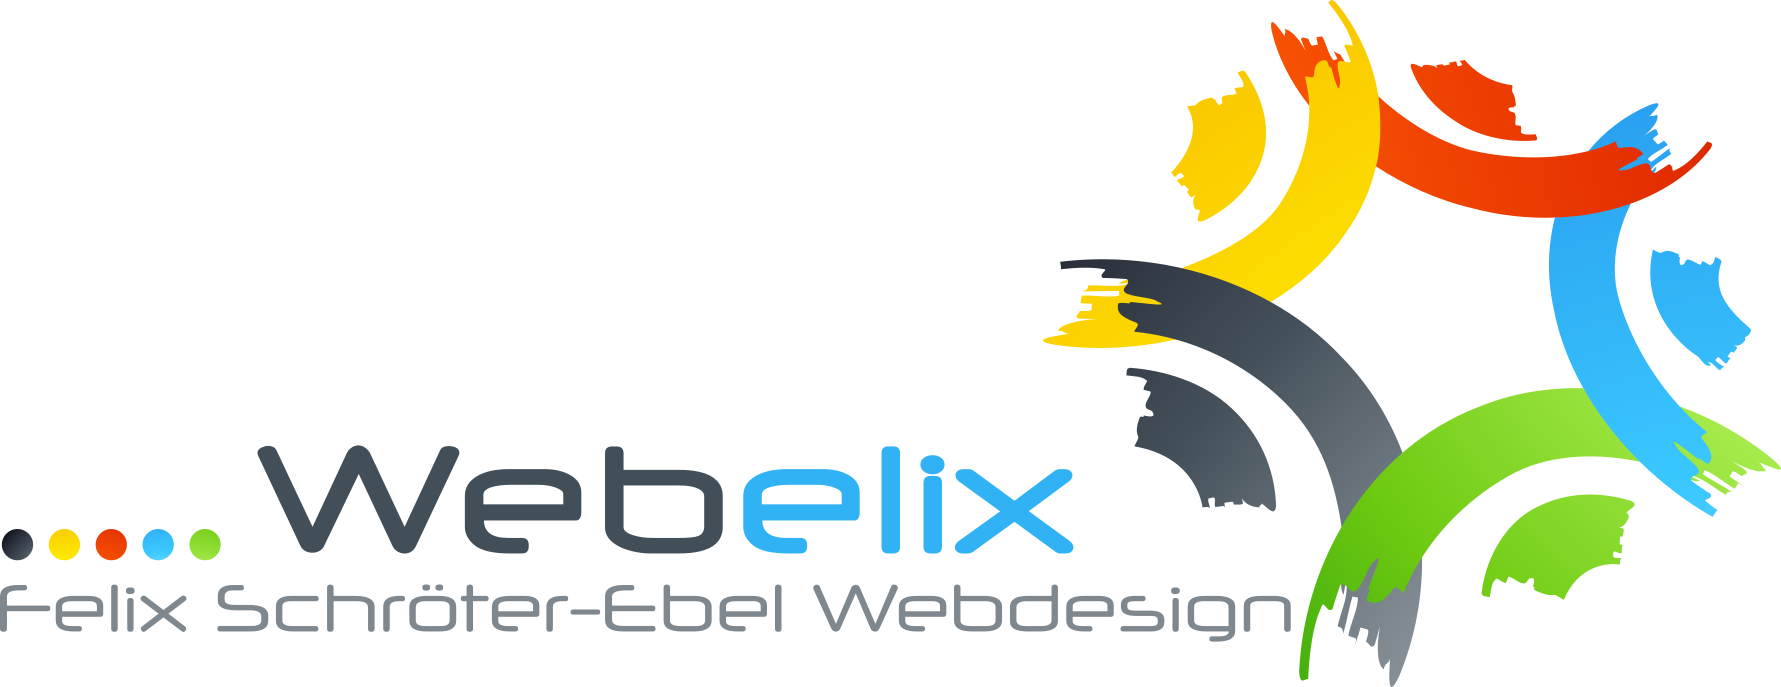 Webelix - Felix Schröter Webdesign